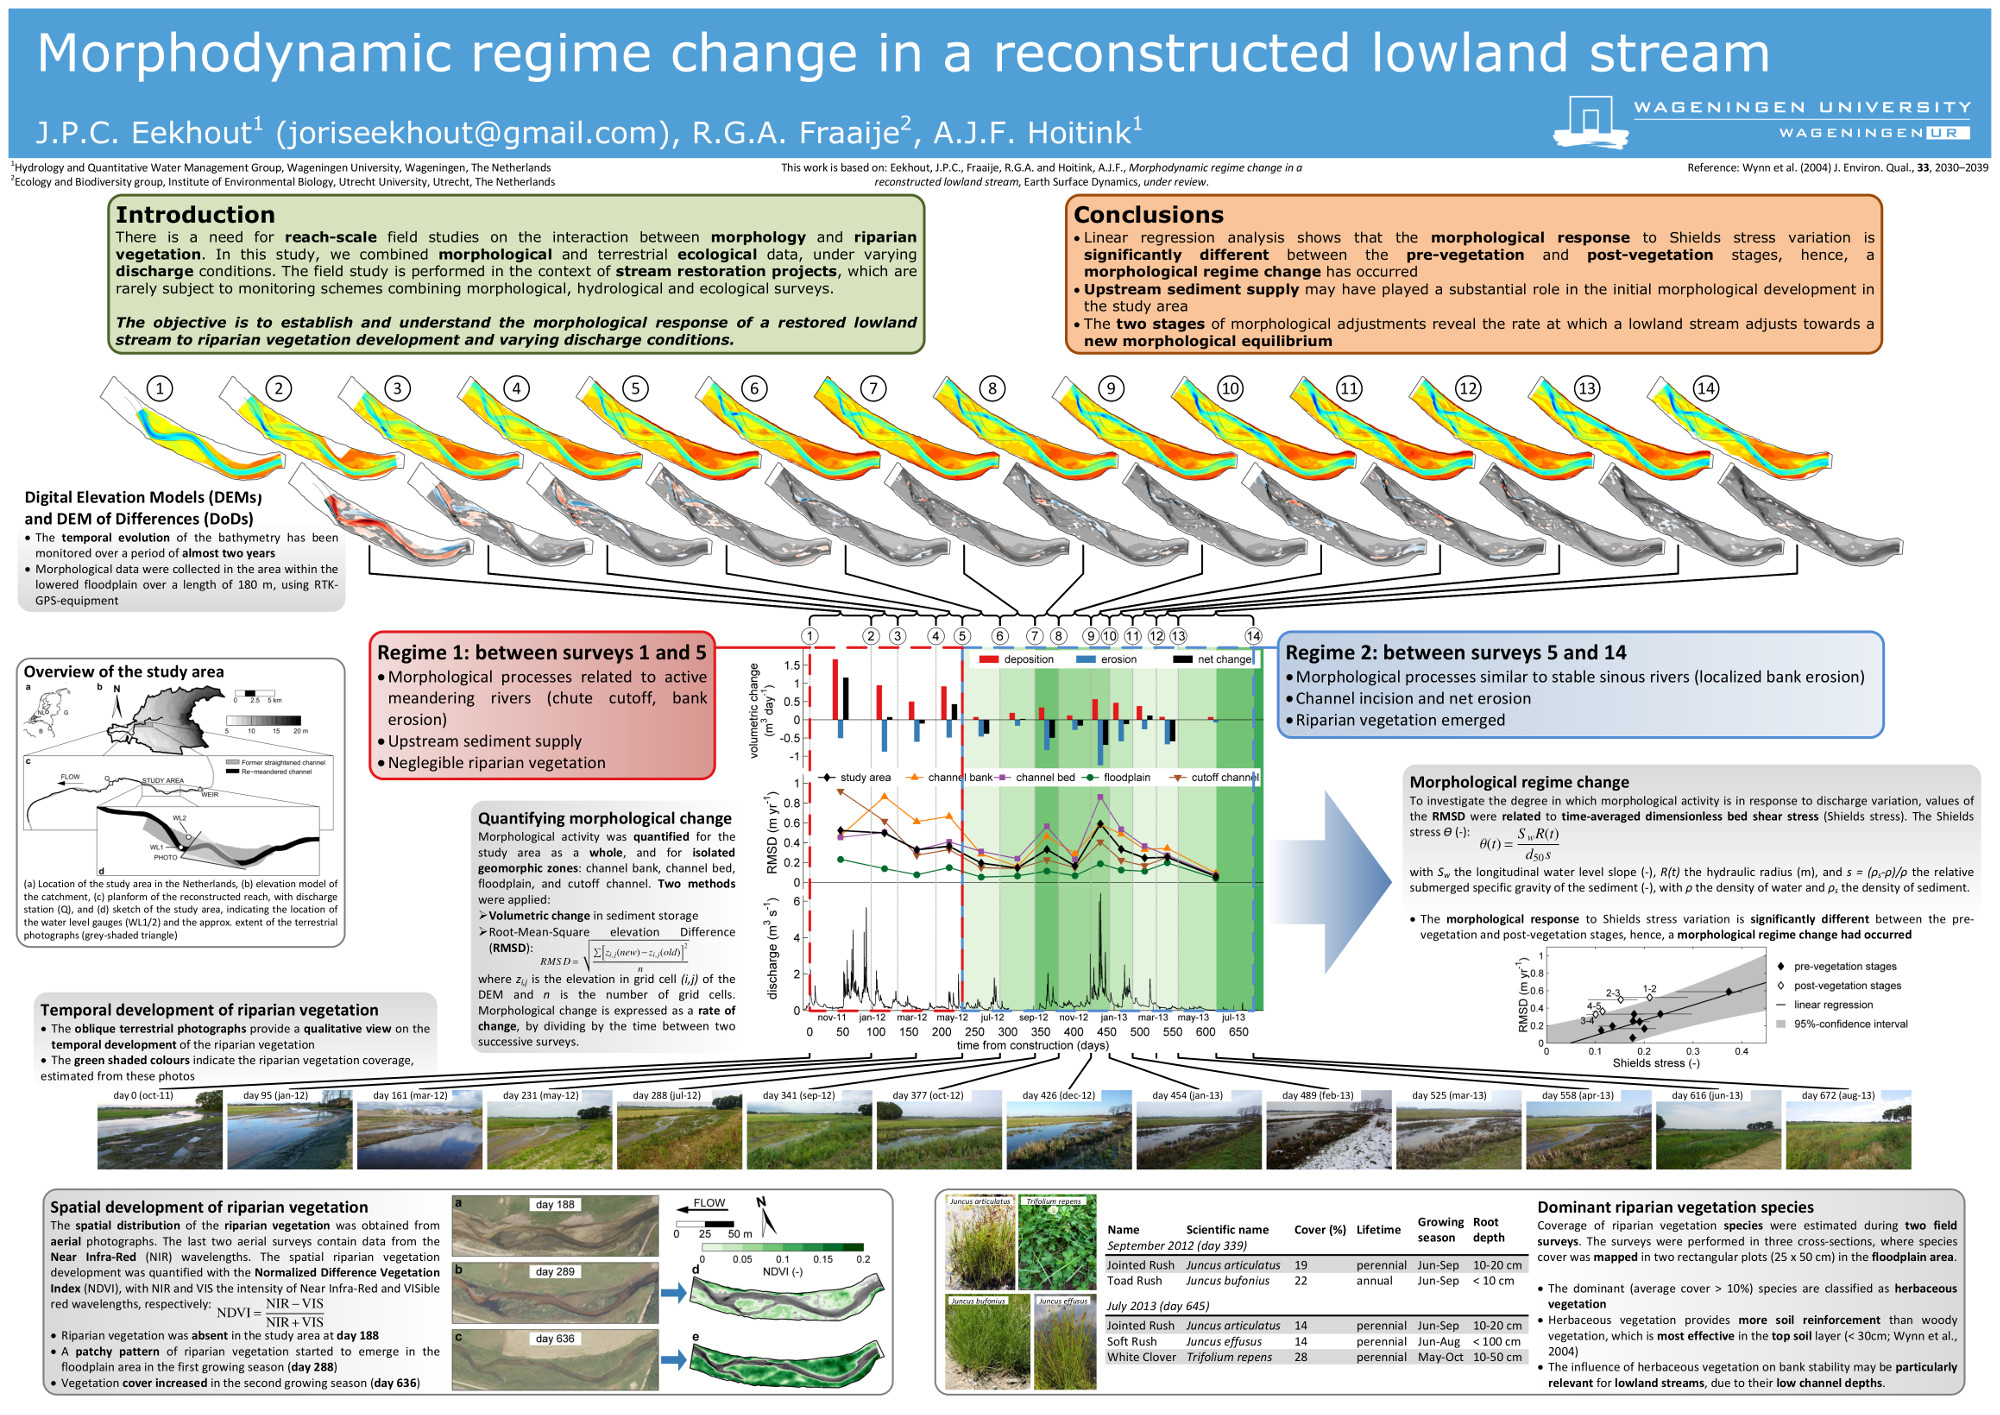 Morphodynamic regime change induced by riparian vegetation in a restored lowland stream